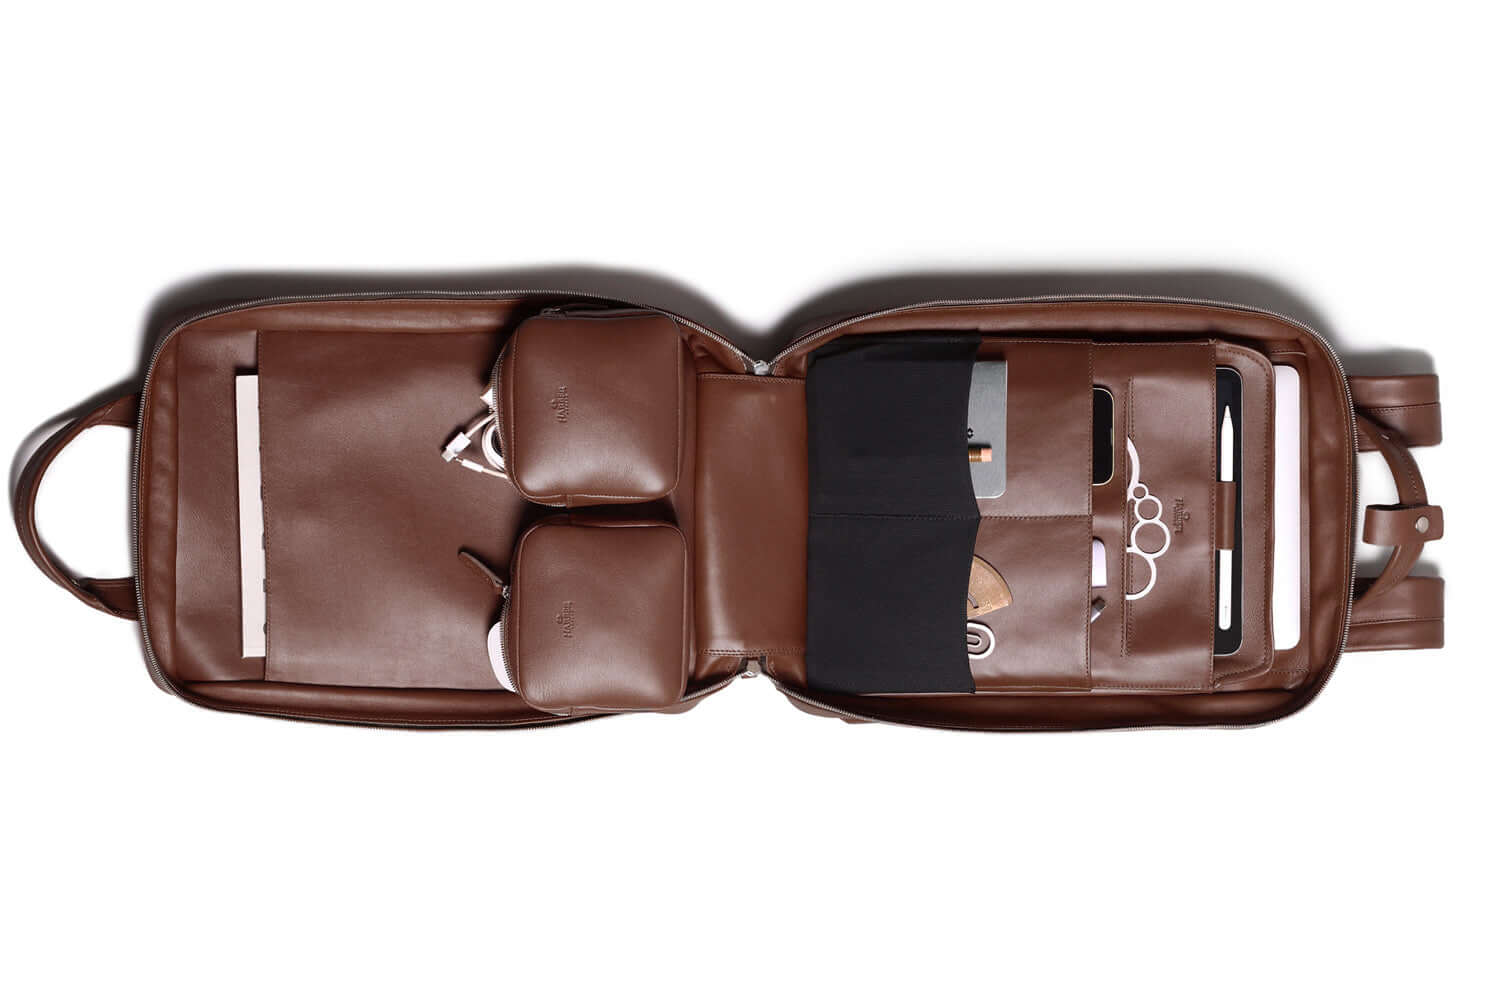 Leather Backpack for Laptop | Harber London